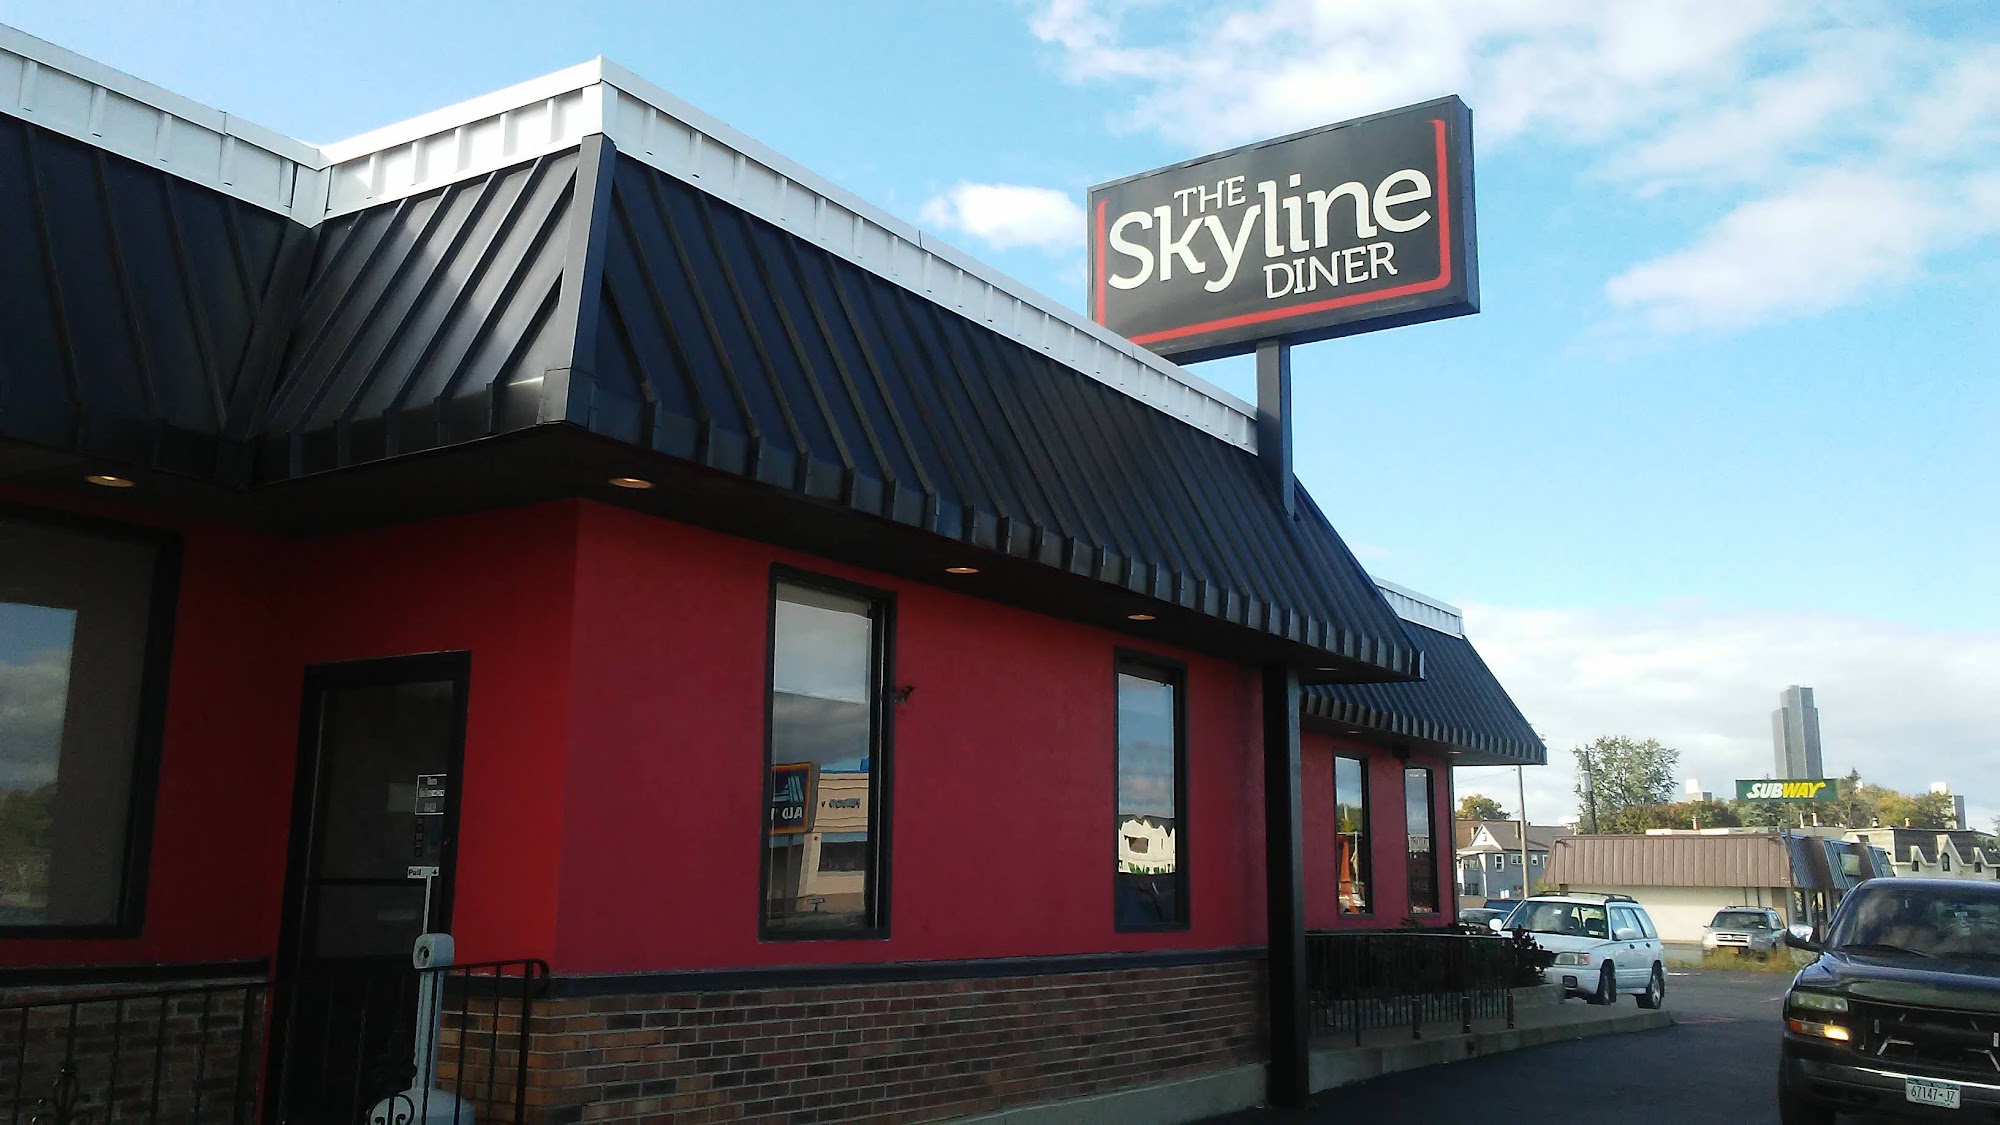 Skyline Diner